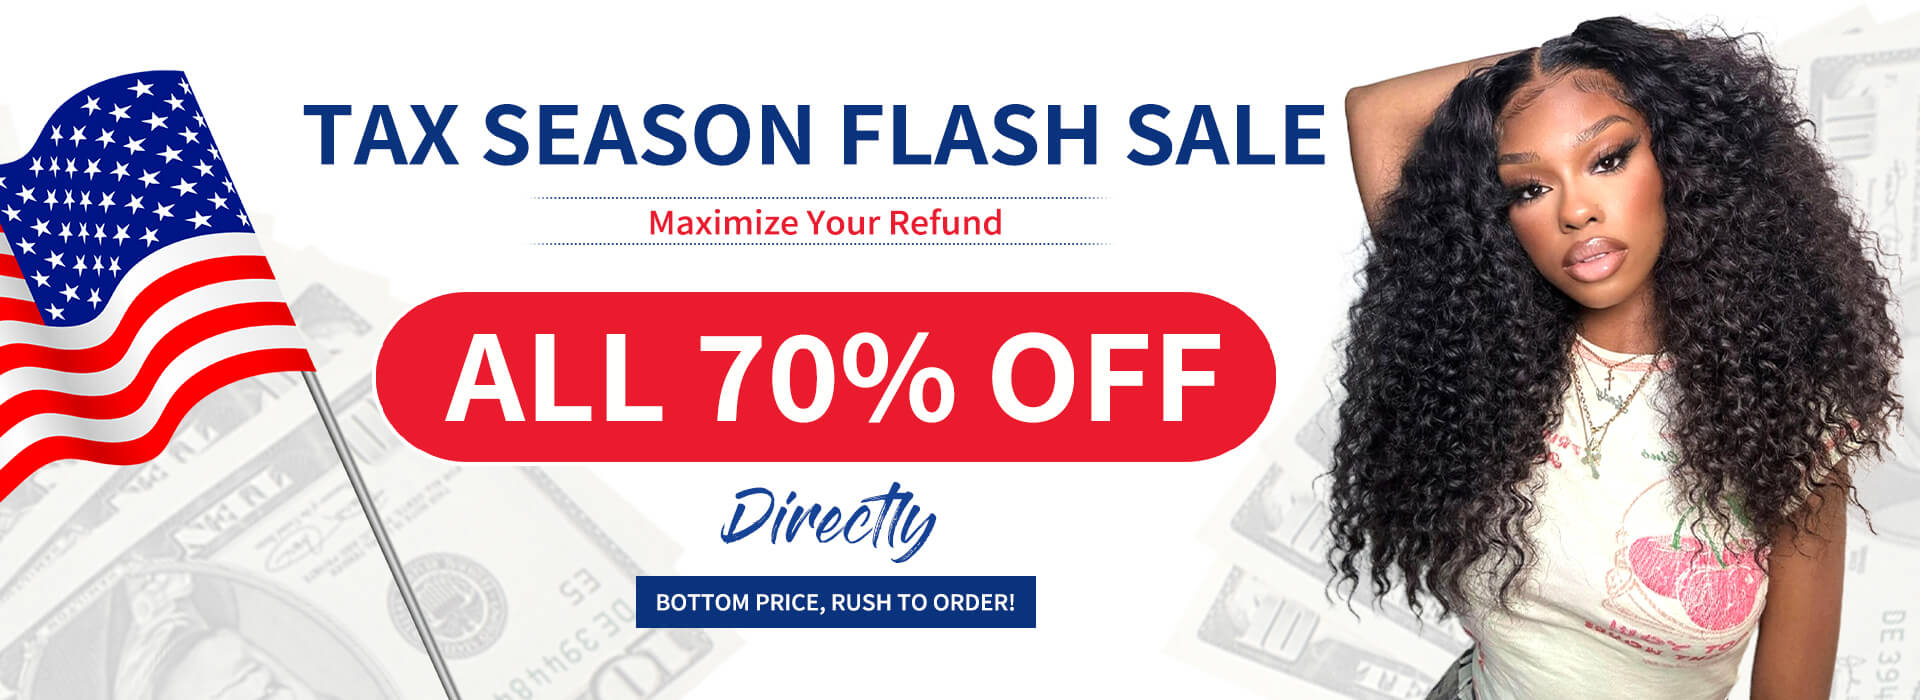 flash sale 70% off